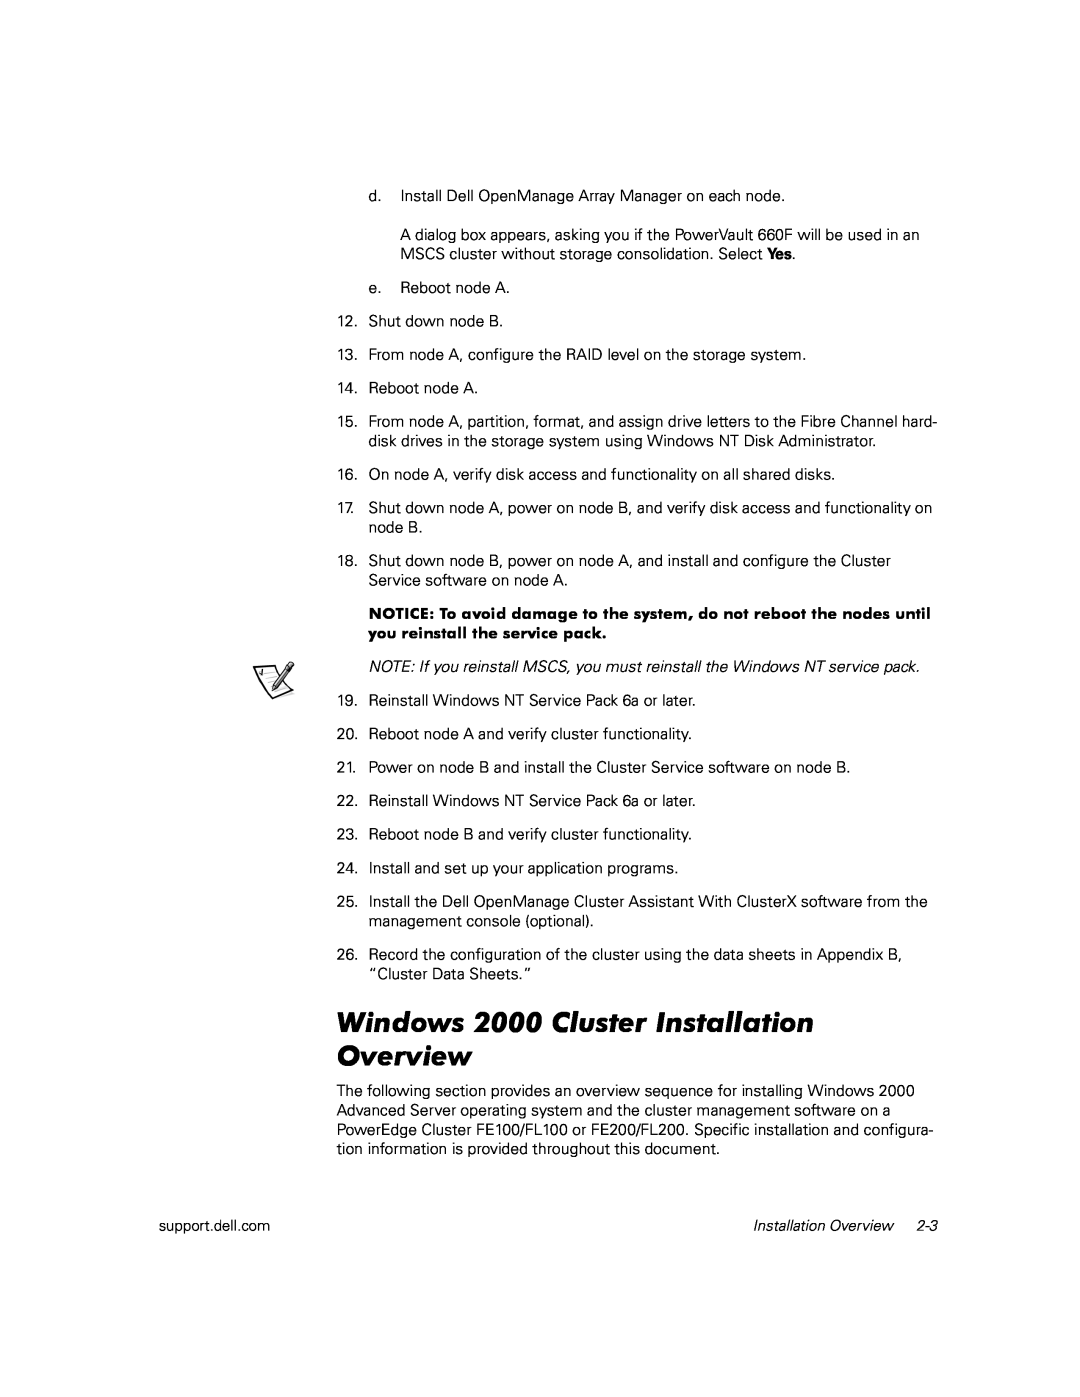 Dell FE200/FL200, FE100/FL100 manual Windows 2000 Cluster Installation Overview 